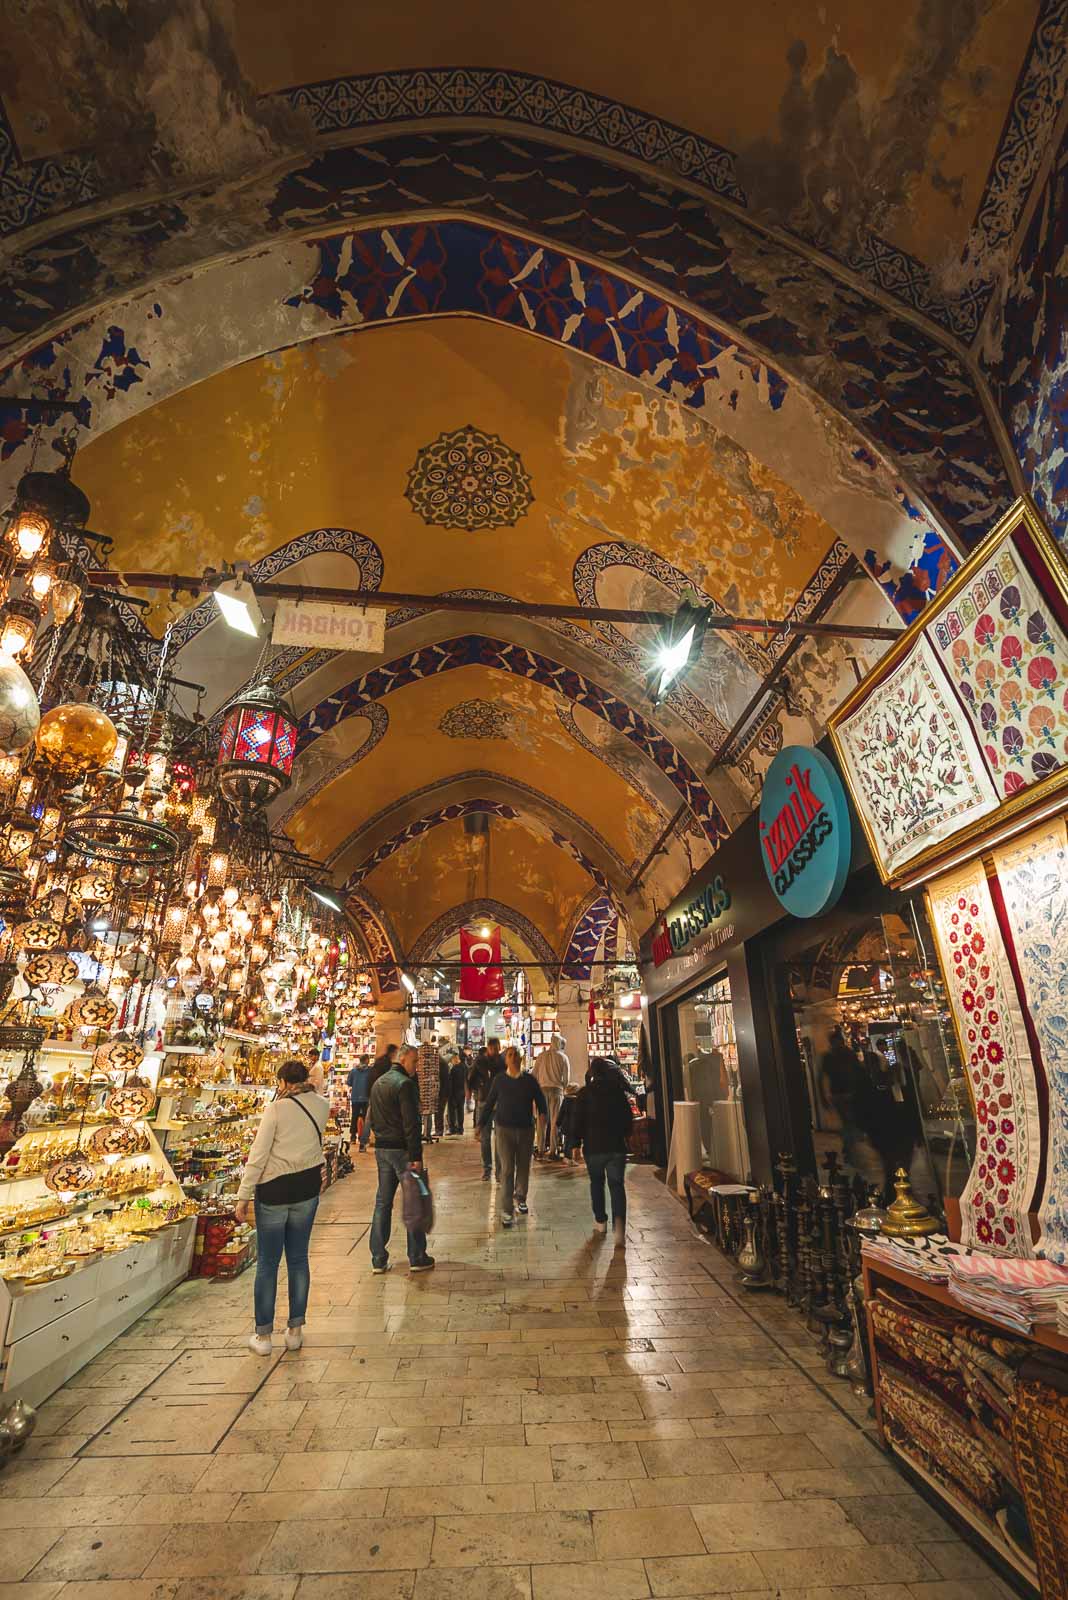 The Grand Bazaar in Istanbul Turkey